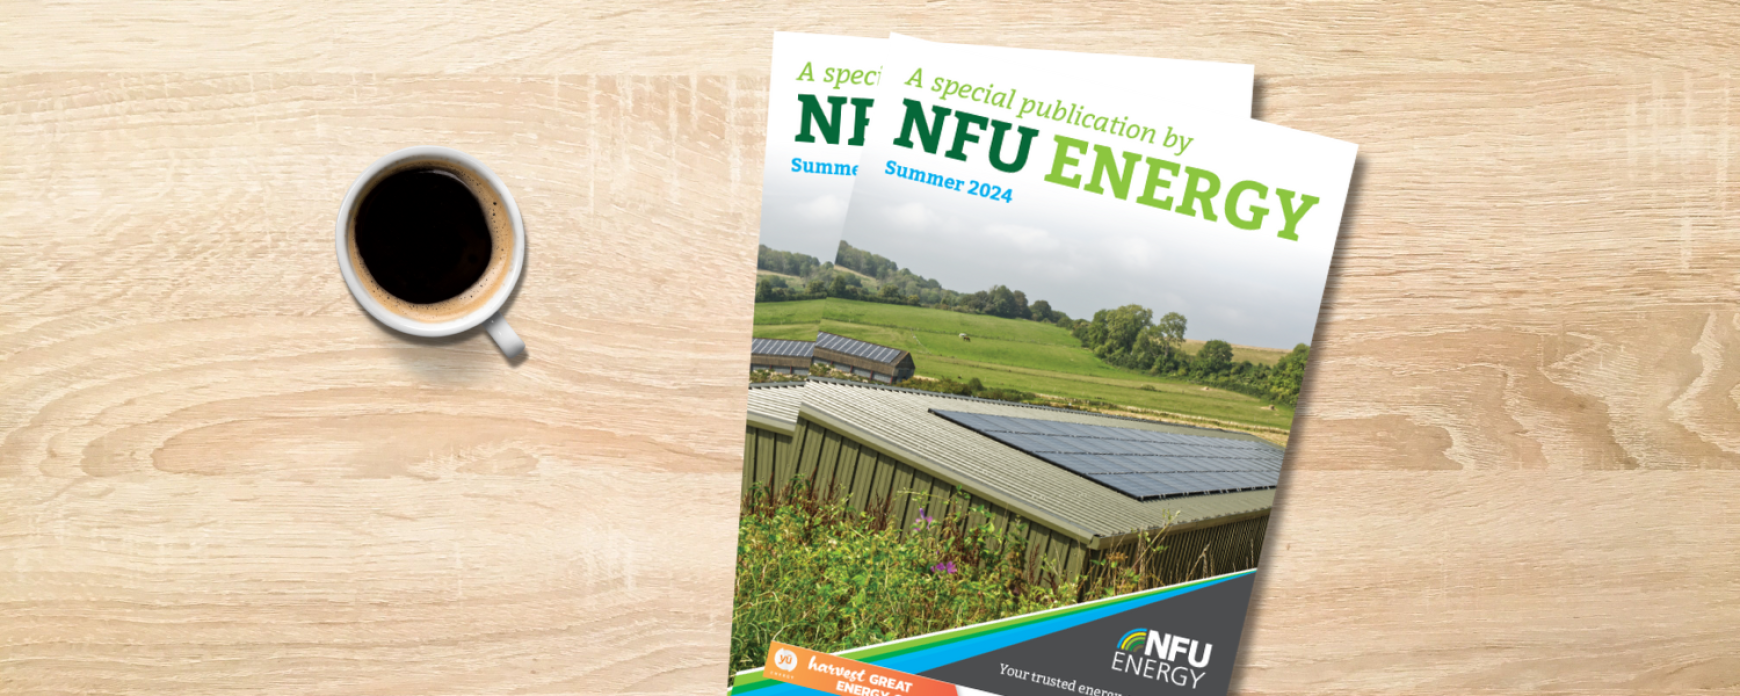 NFU Energy’s Summer Magazine!